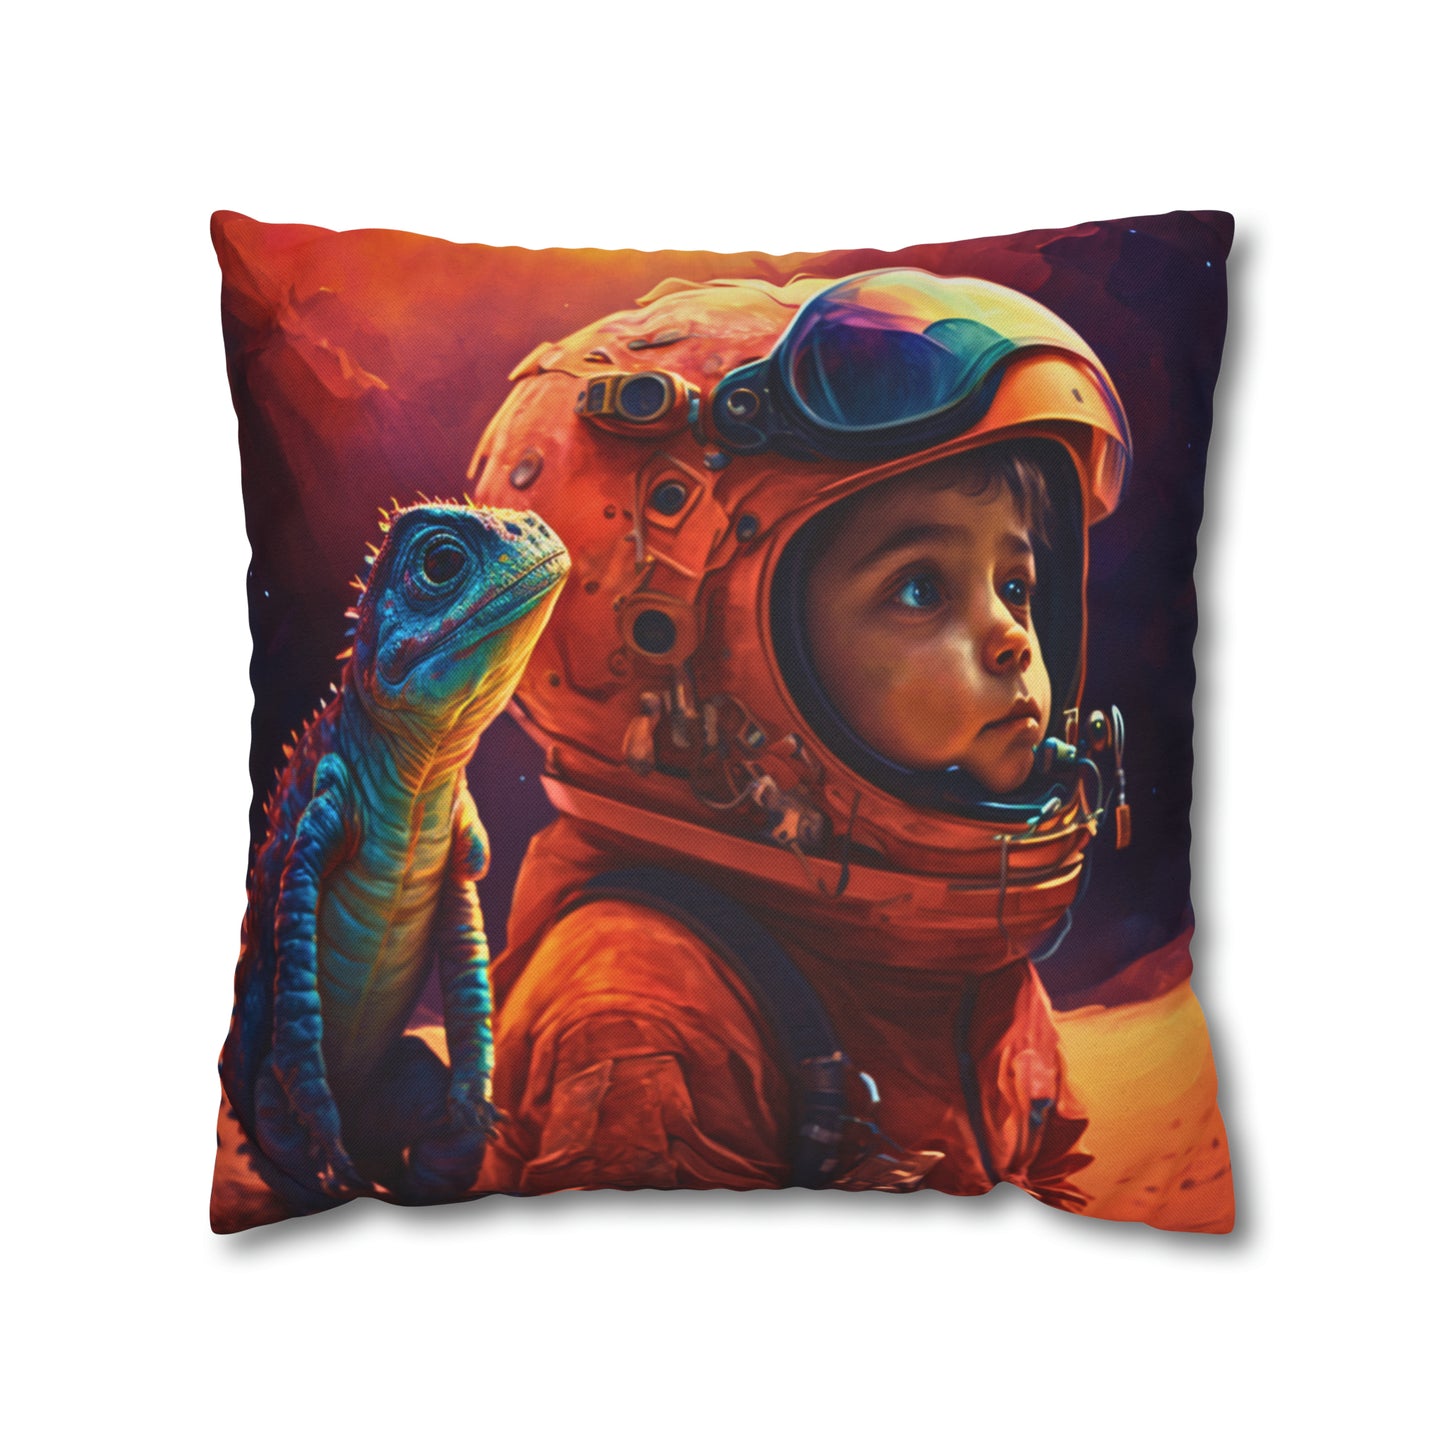 Square Pillow - Liam's Adventures in Space